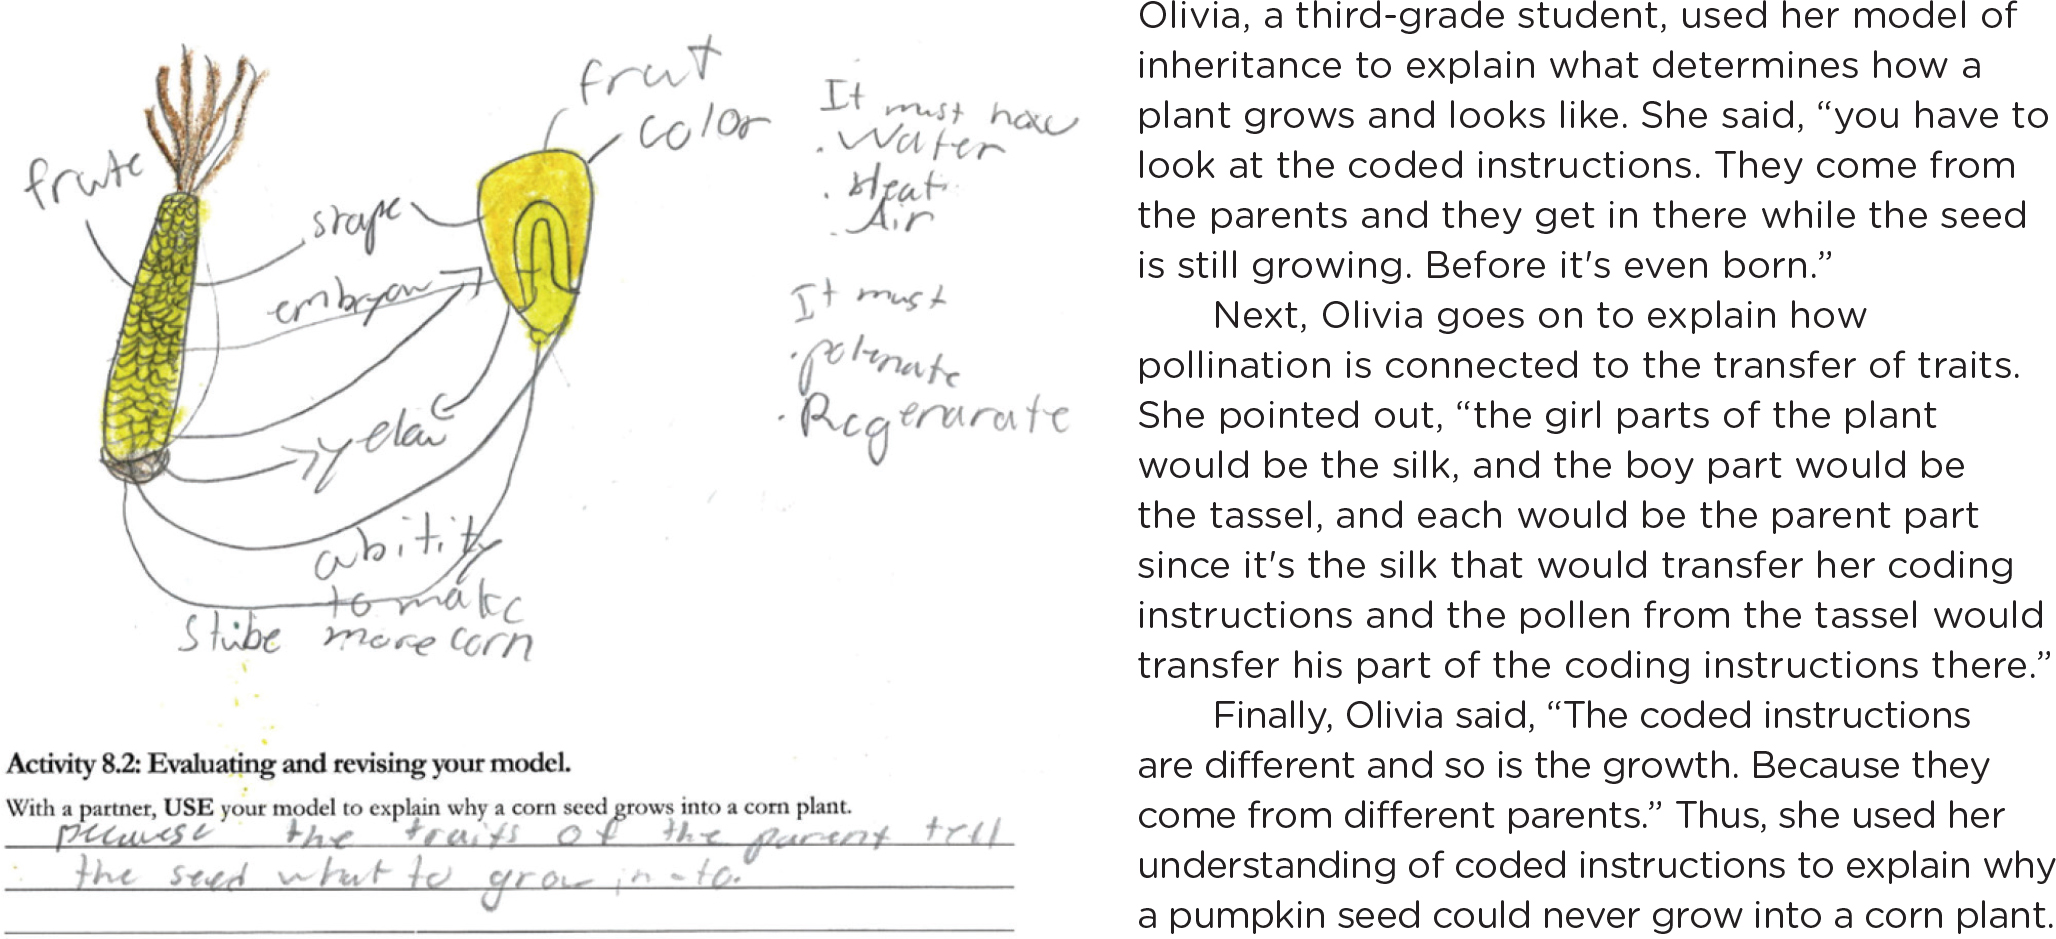 Olivia’s model of inheritance and explanation.